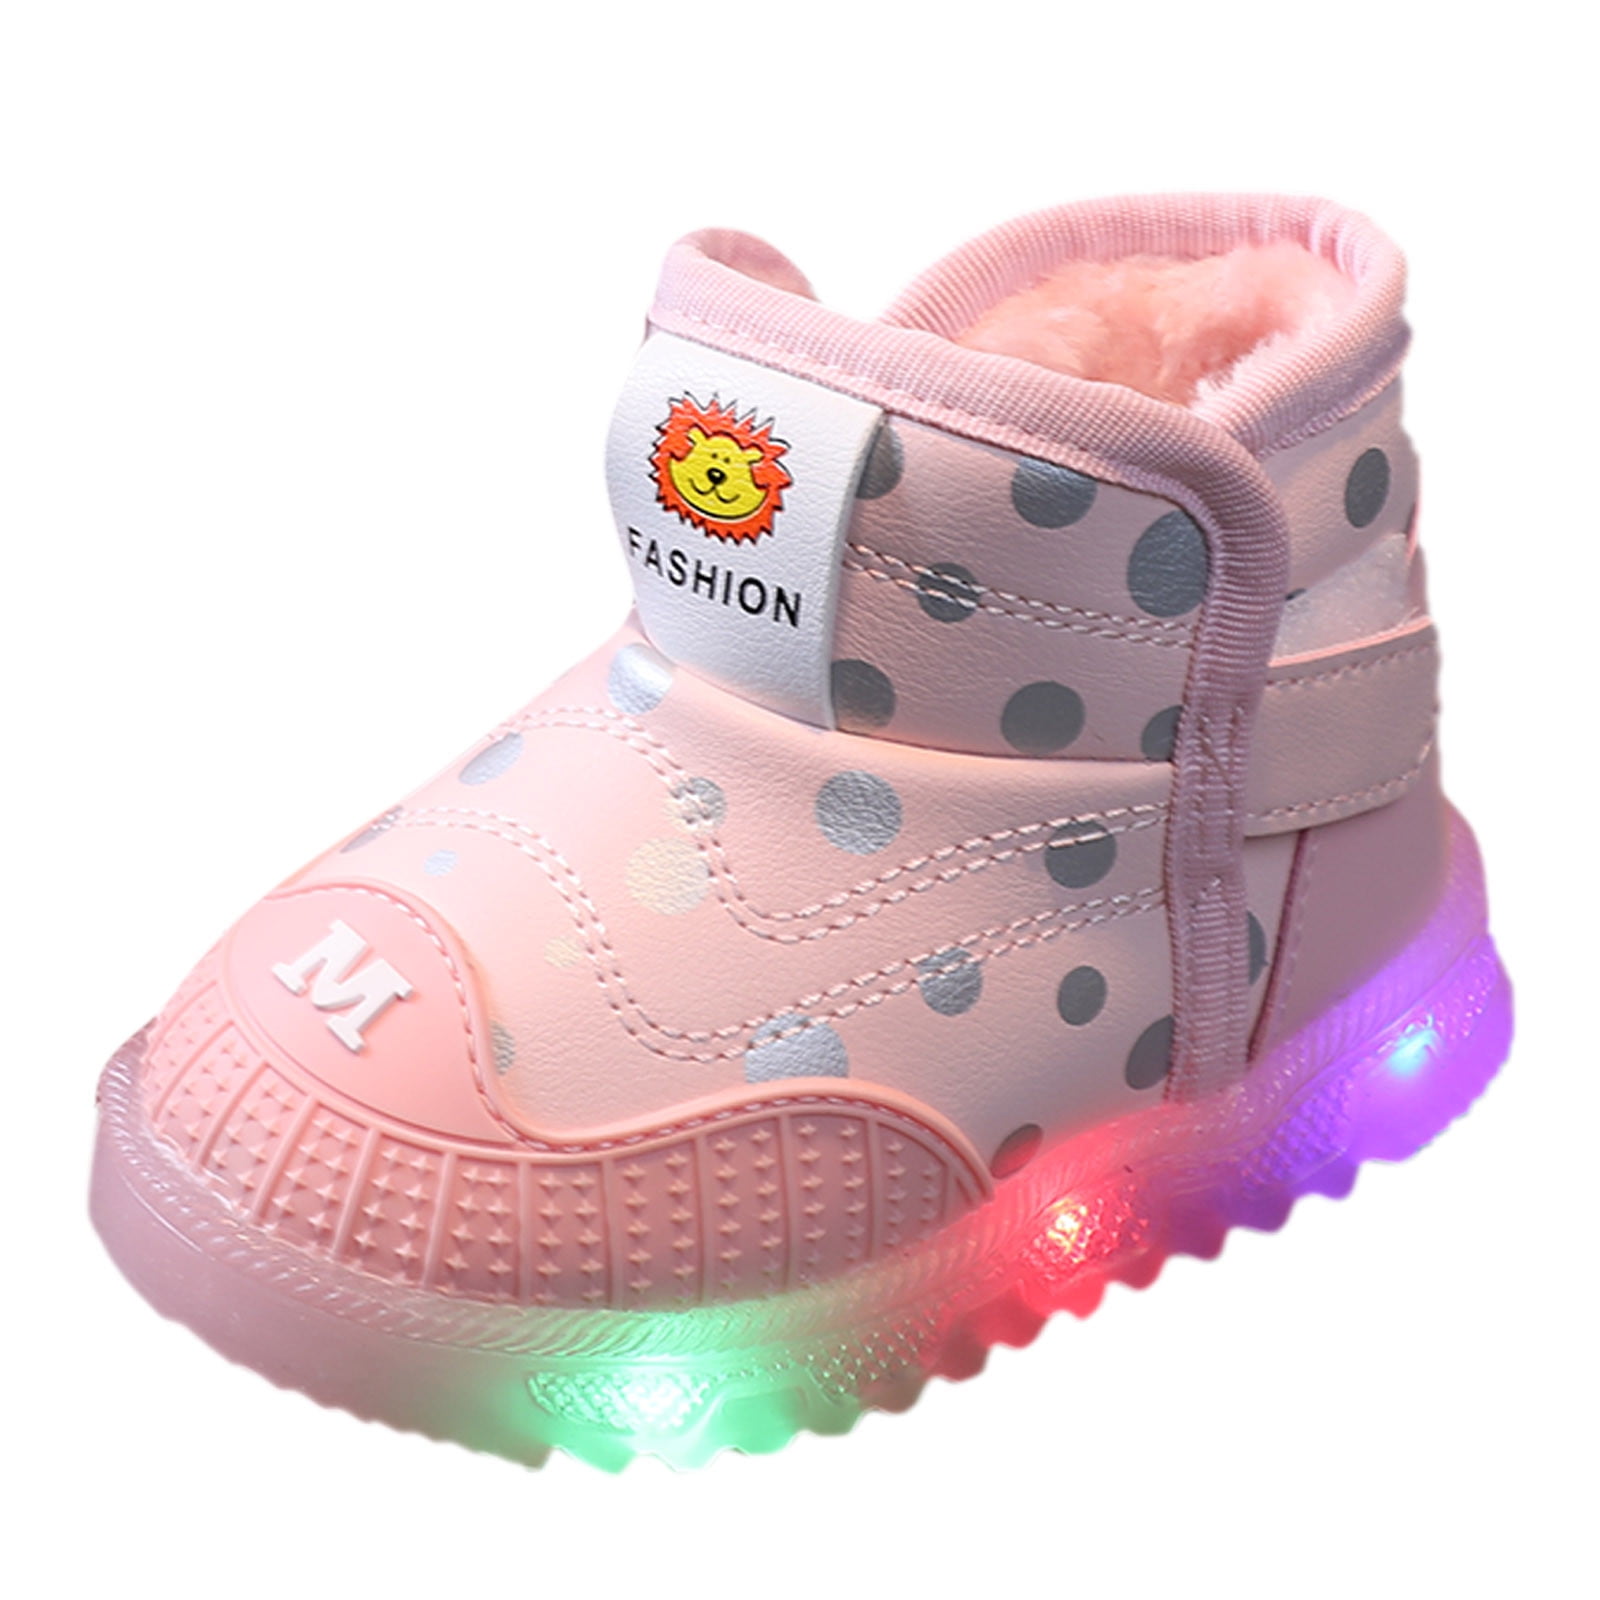 Yinguo Children Kids Baby Girls Boys Boots Led Light Luminous Warm Cotton  Shoes Pink 26 